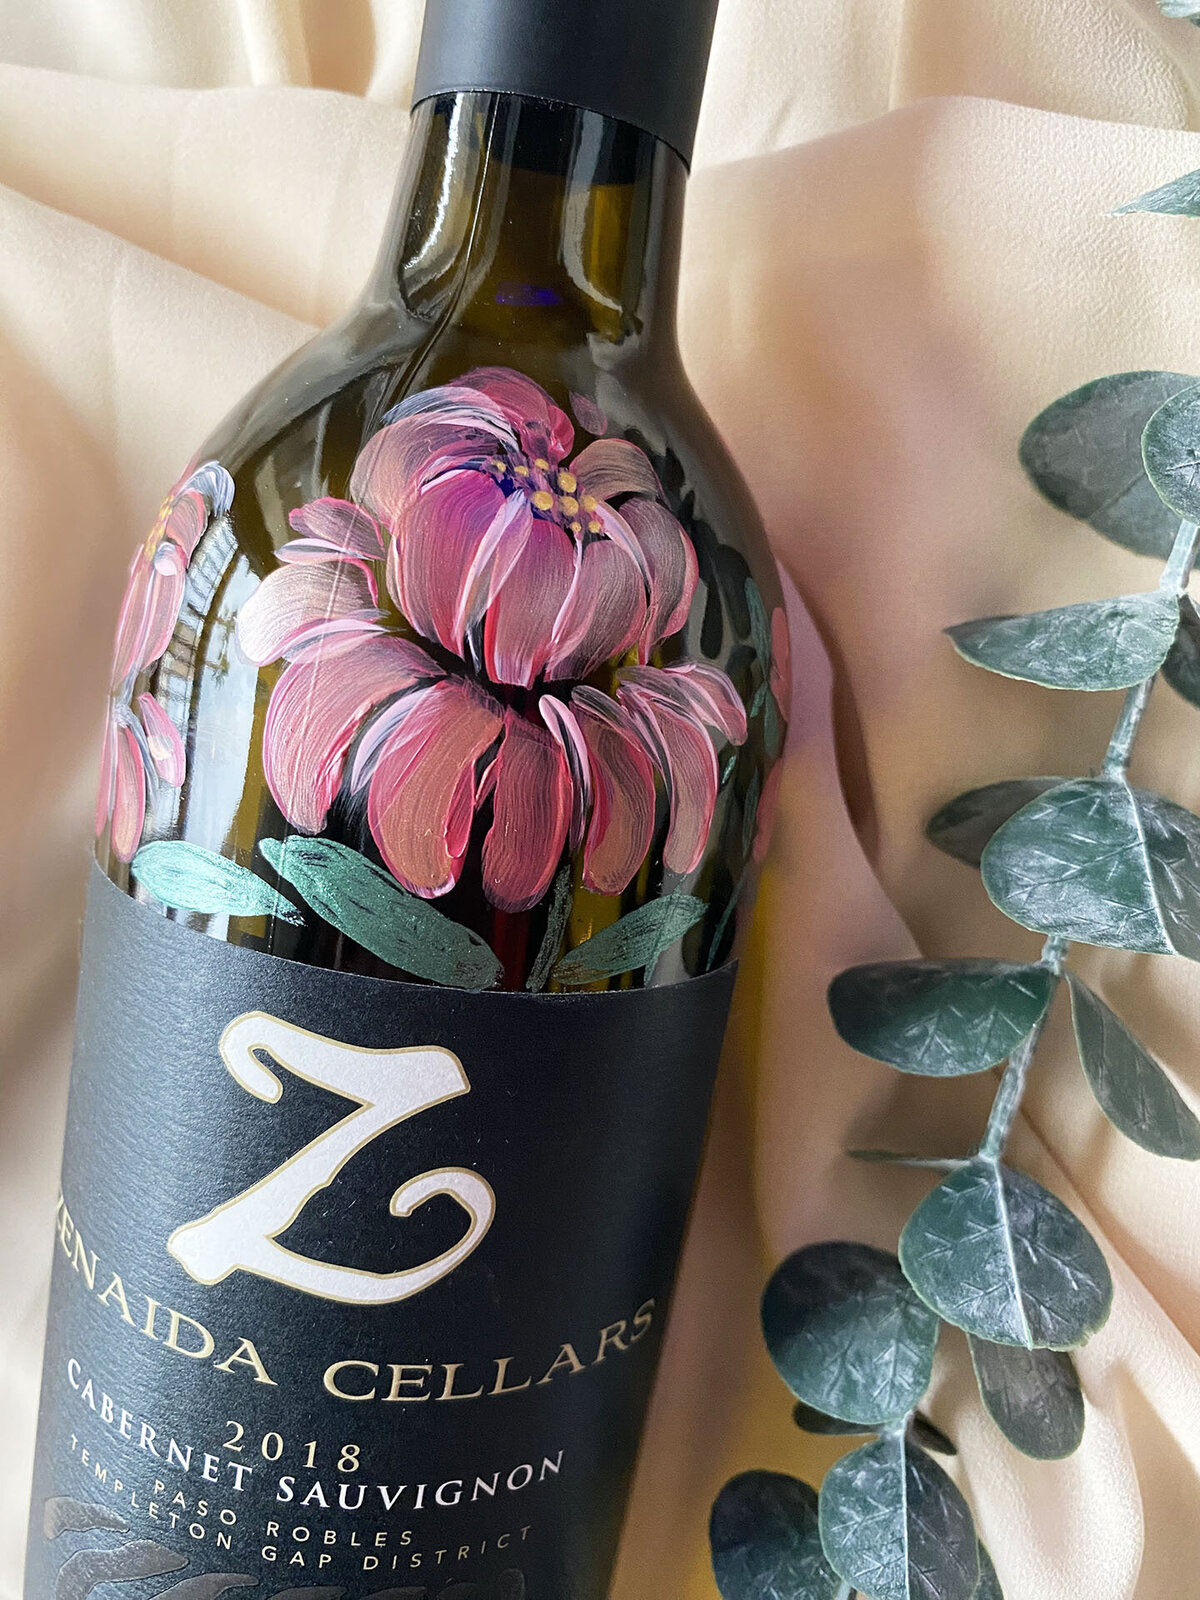 Zenaida Wine Bottle Painted with Peonies by Los Angeles Artist